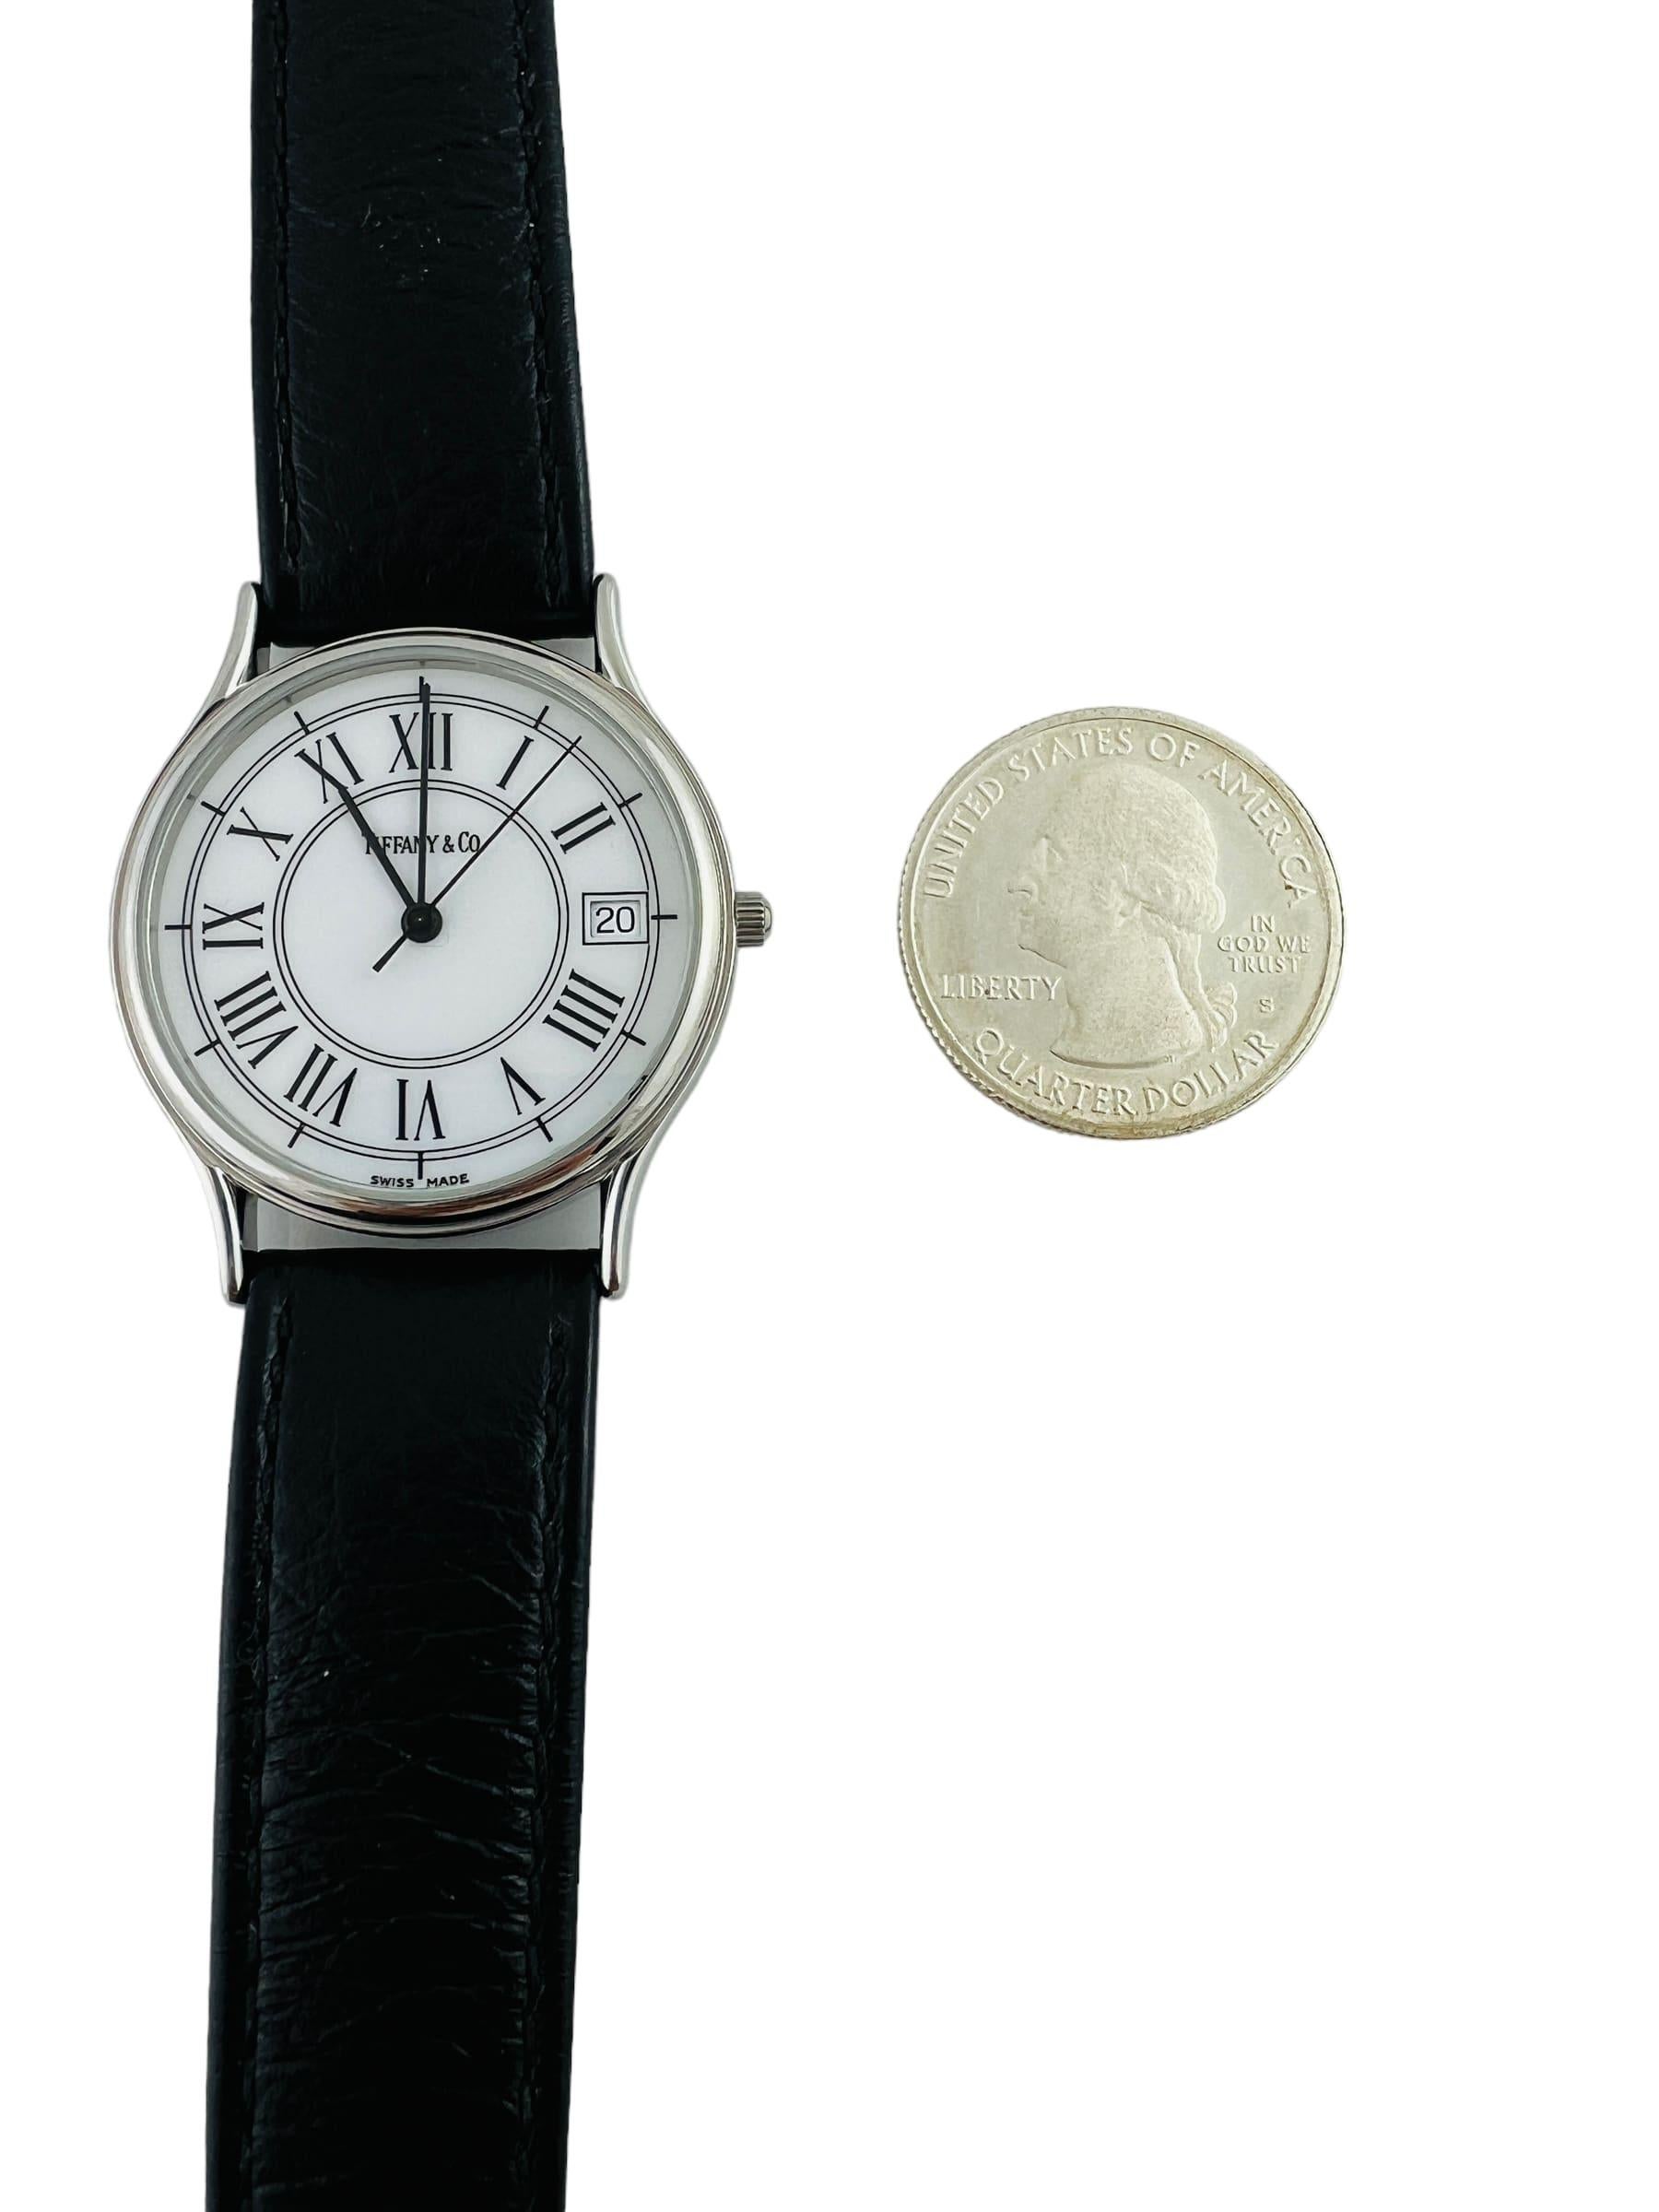 Tiffany & Co. Classic Watch White Roman Dial Quartz with Box 11